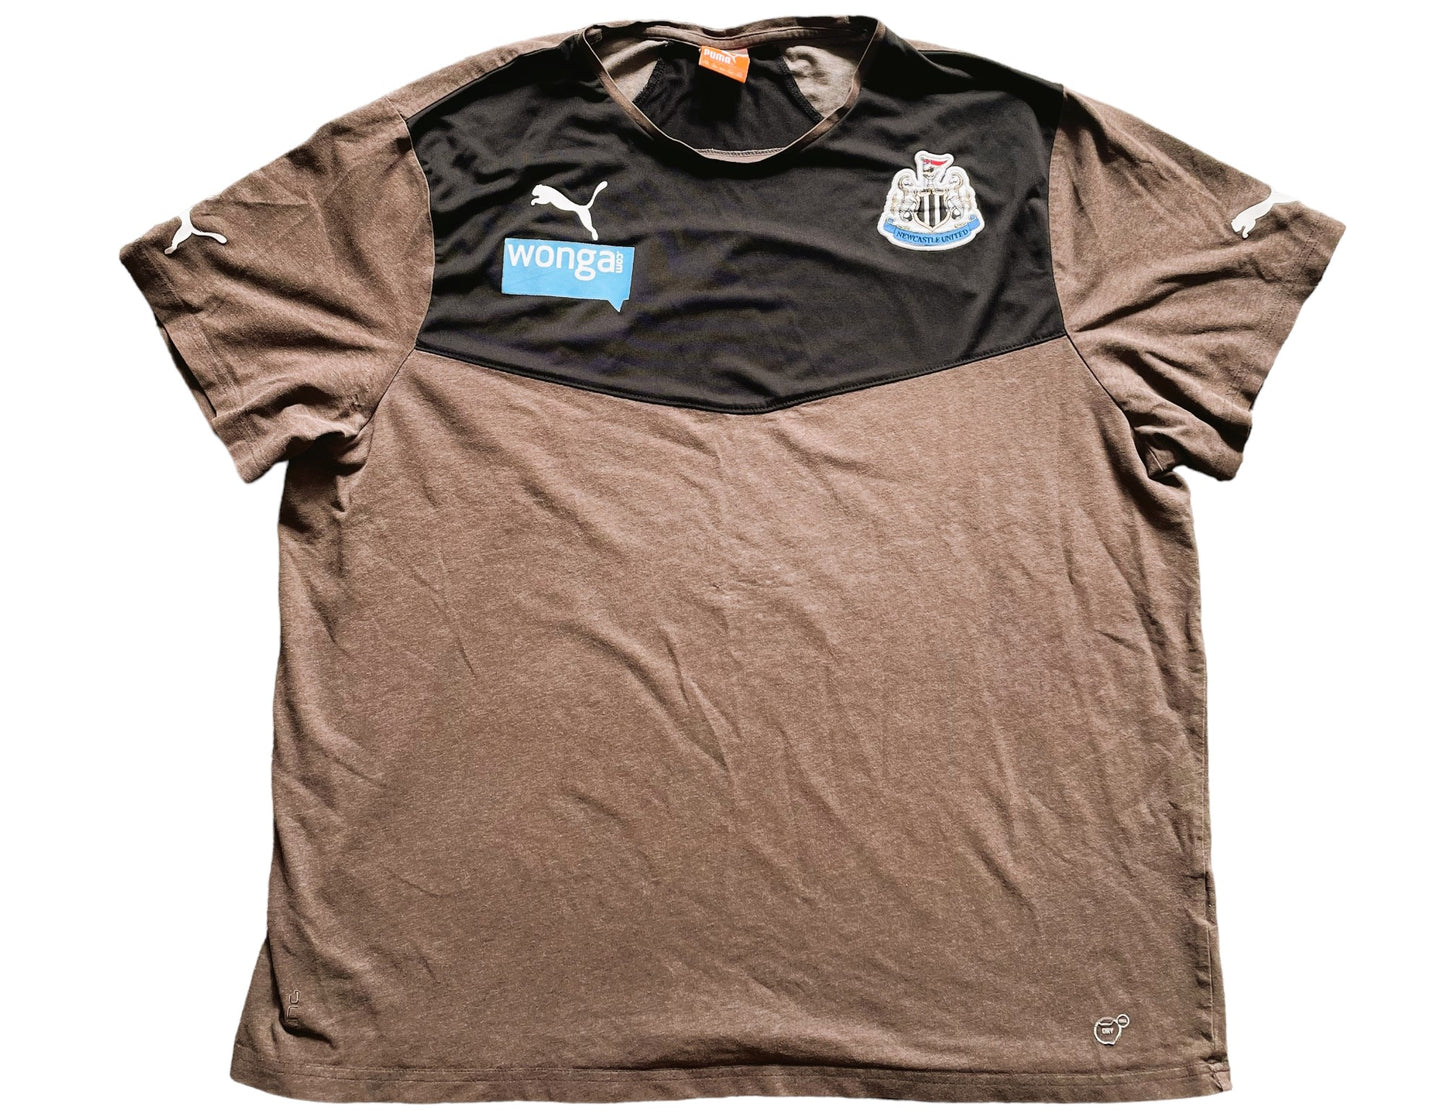 Newcastle Training Shirt 2014 (good) Adults 2XL